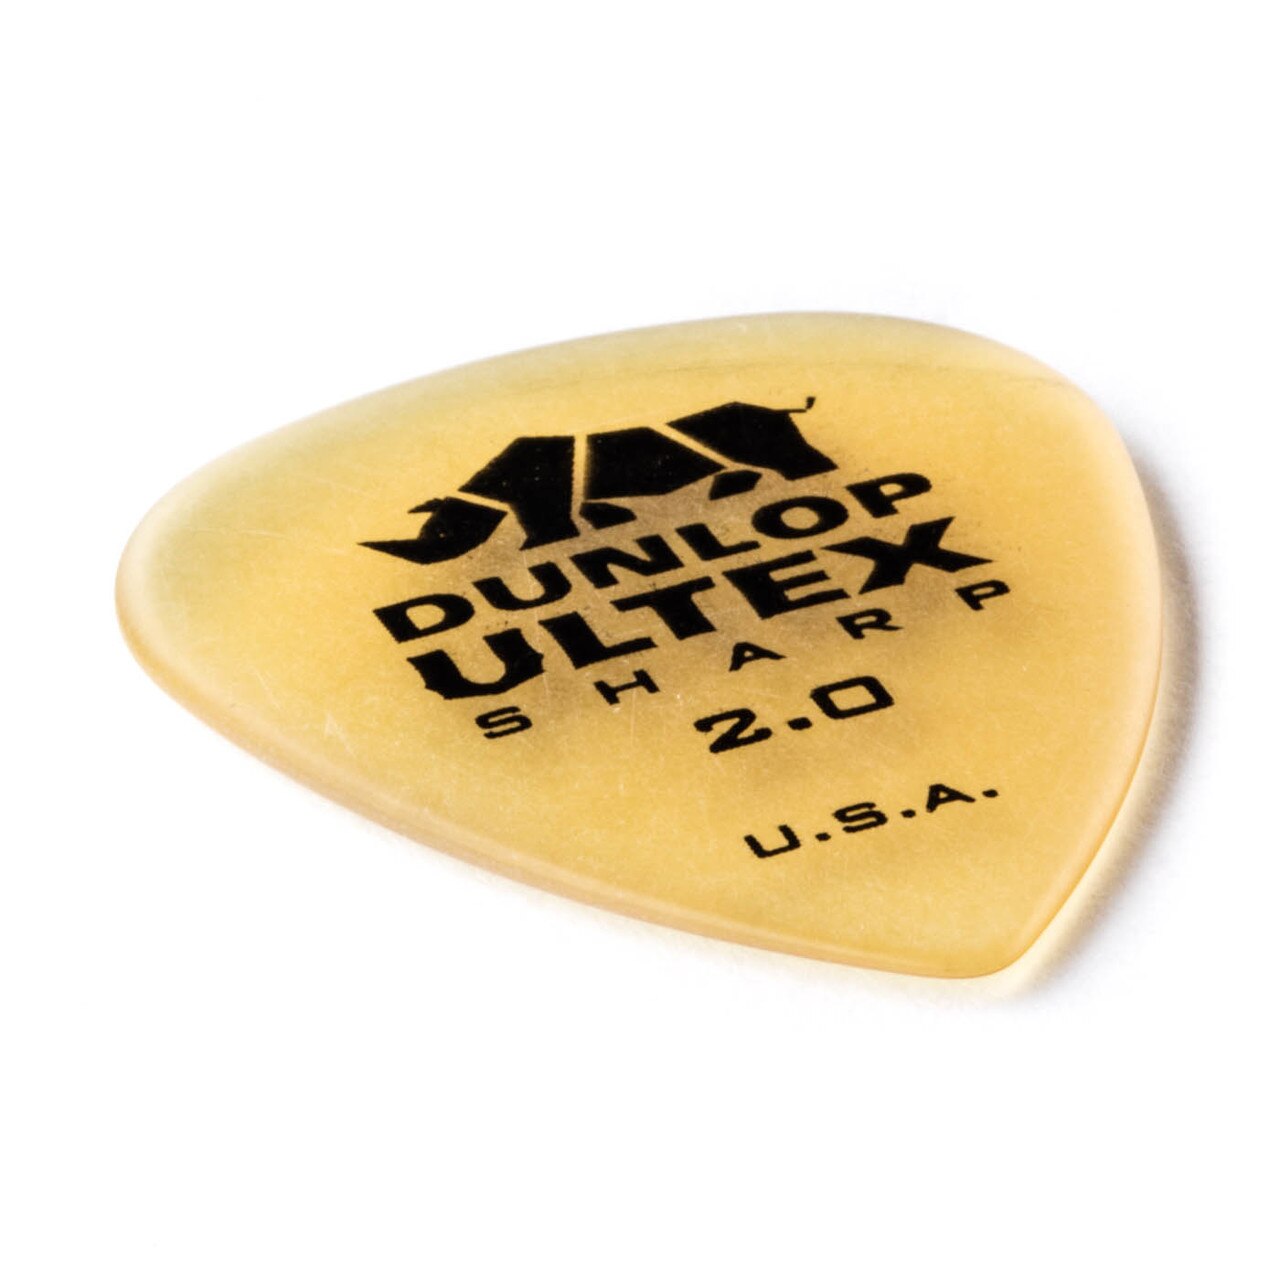 Jim Dunlop Ultex Sharp 433 2.0mm - Guitar pick - Variation 1